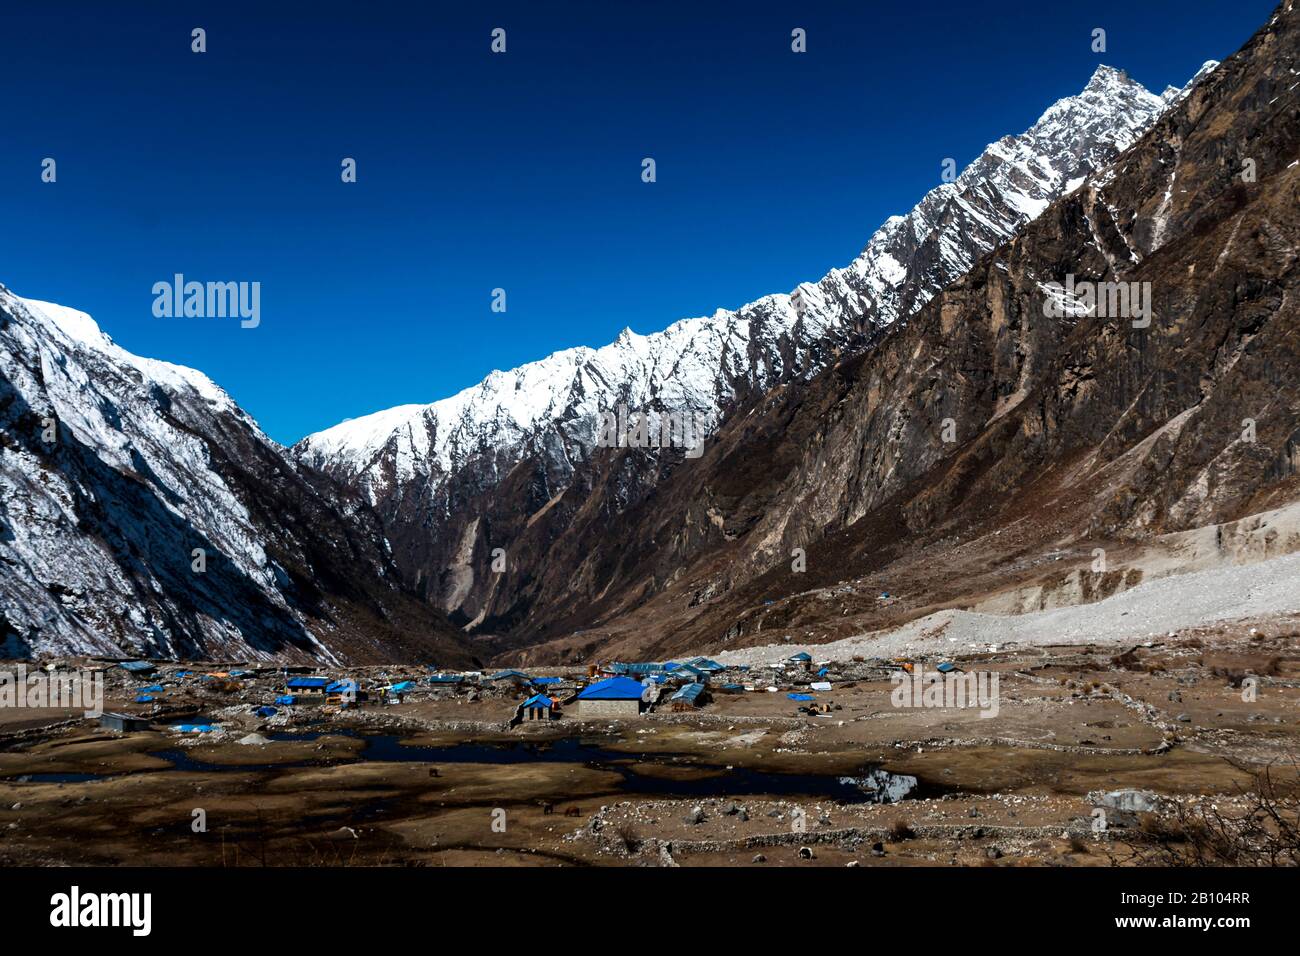 The Langtang, Langtang Valley, Nepal, rebuilt after the 2015 earthquake Stock Photo